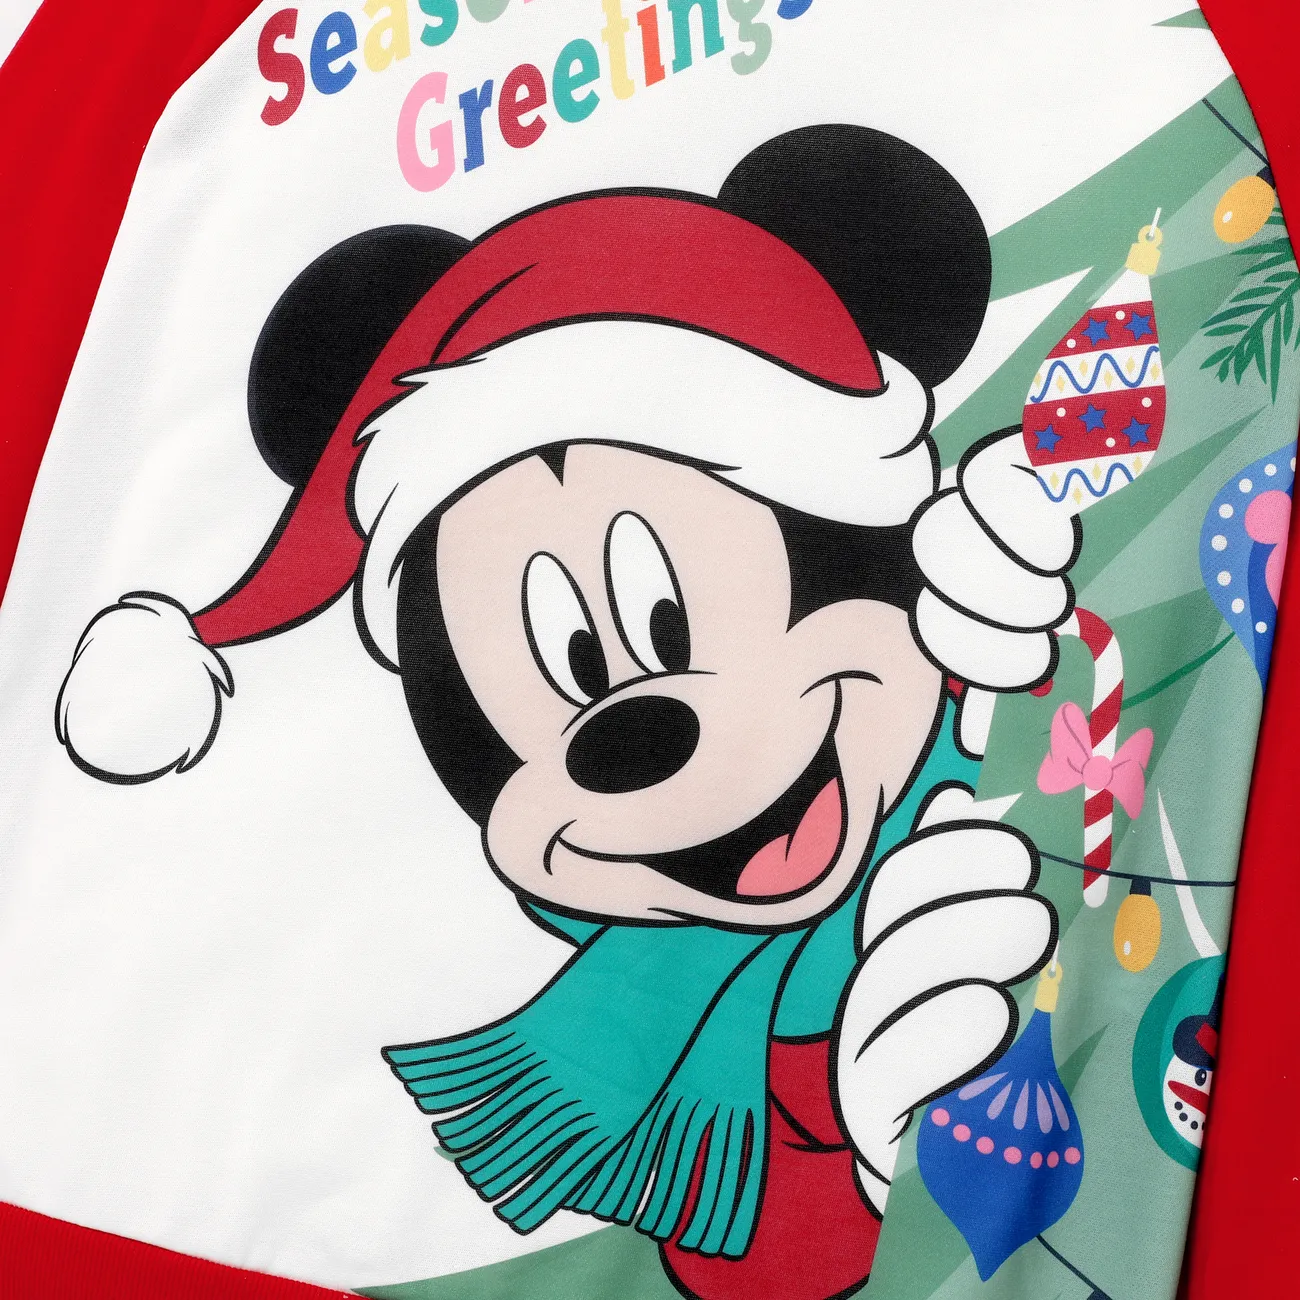 Disney Mickey and Friends Looks familiares Navidad Manga larga Conjuntos combinados para familia Tops Rojo big image 1